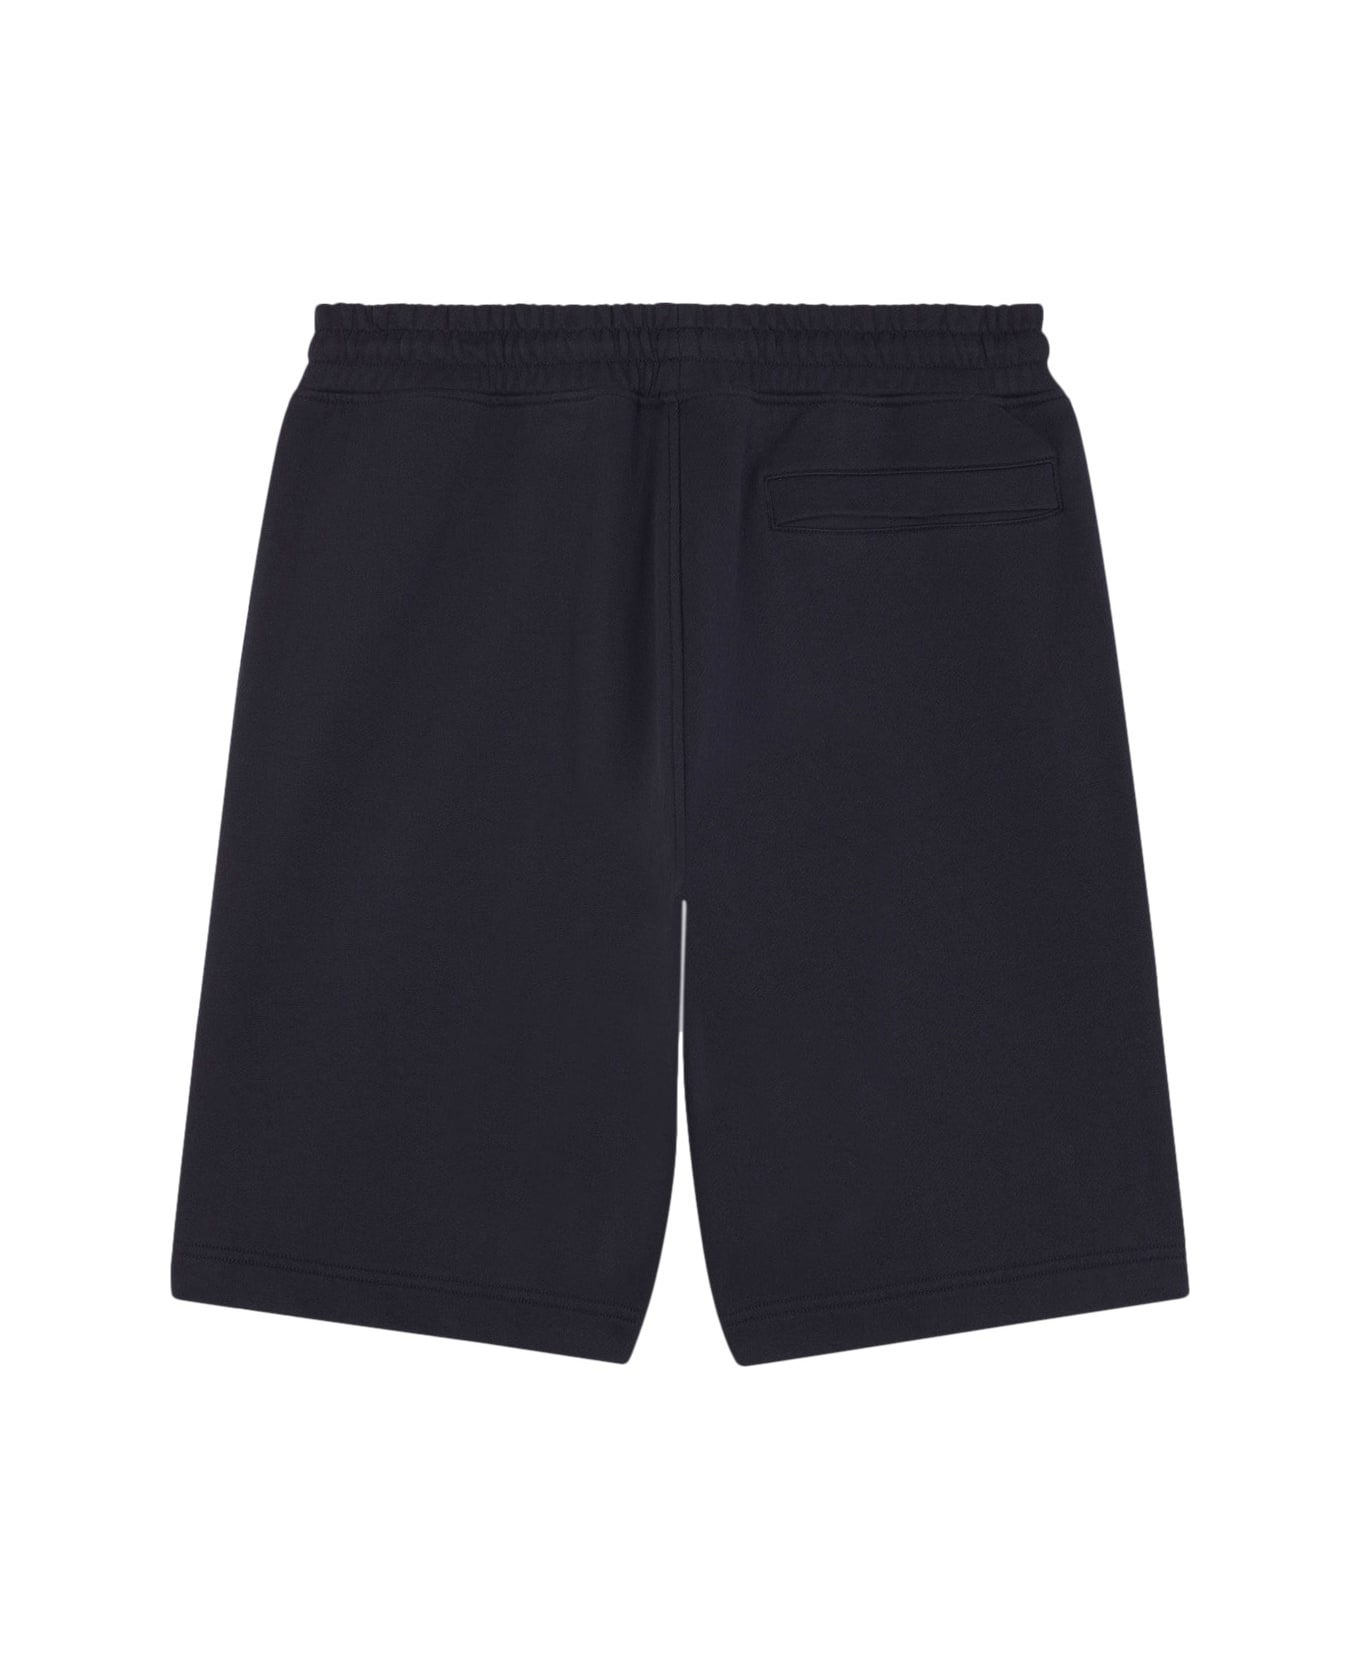 Maison Kitsuné Bermuda Shorts - Black